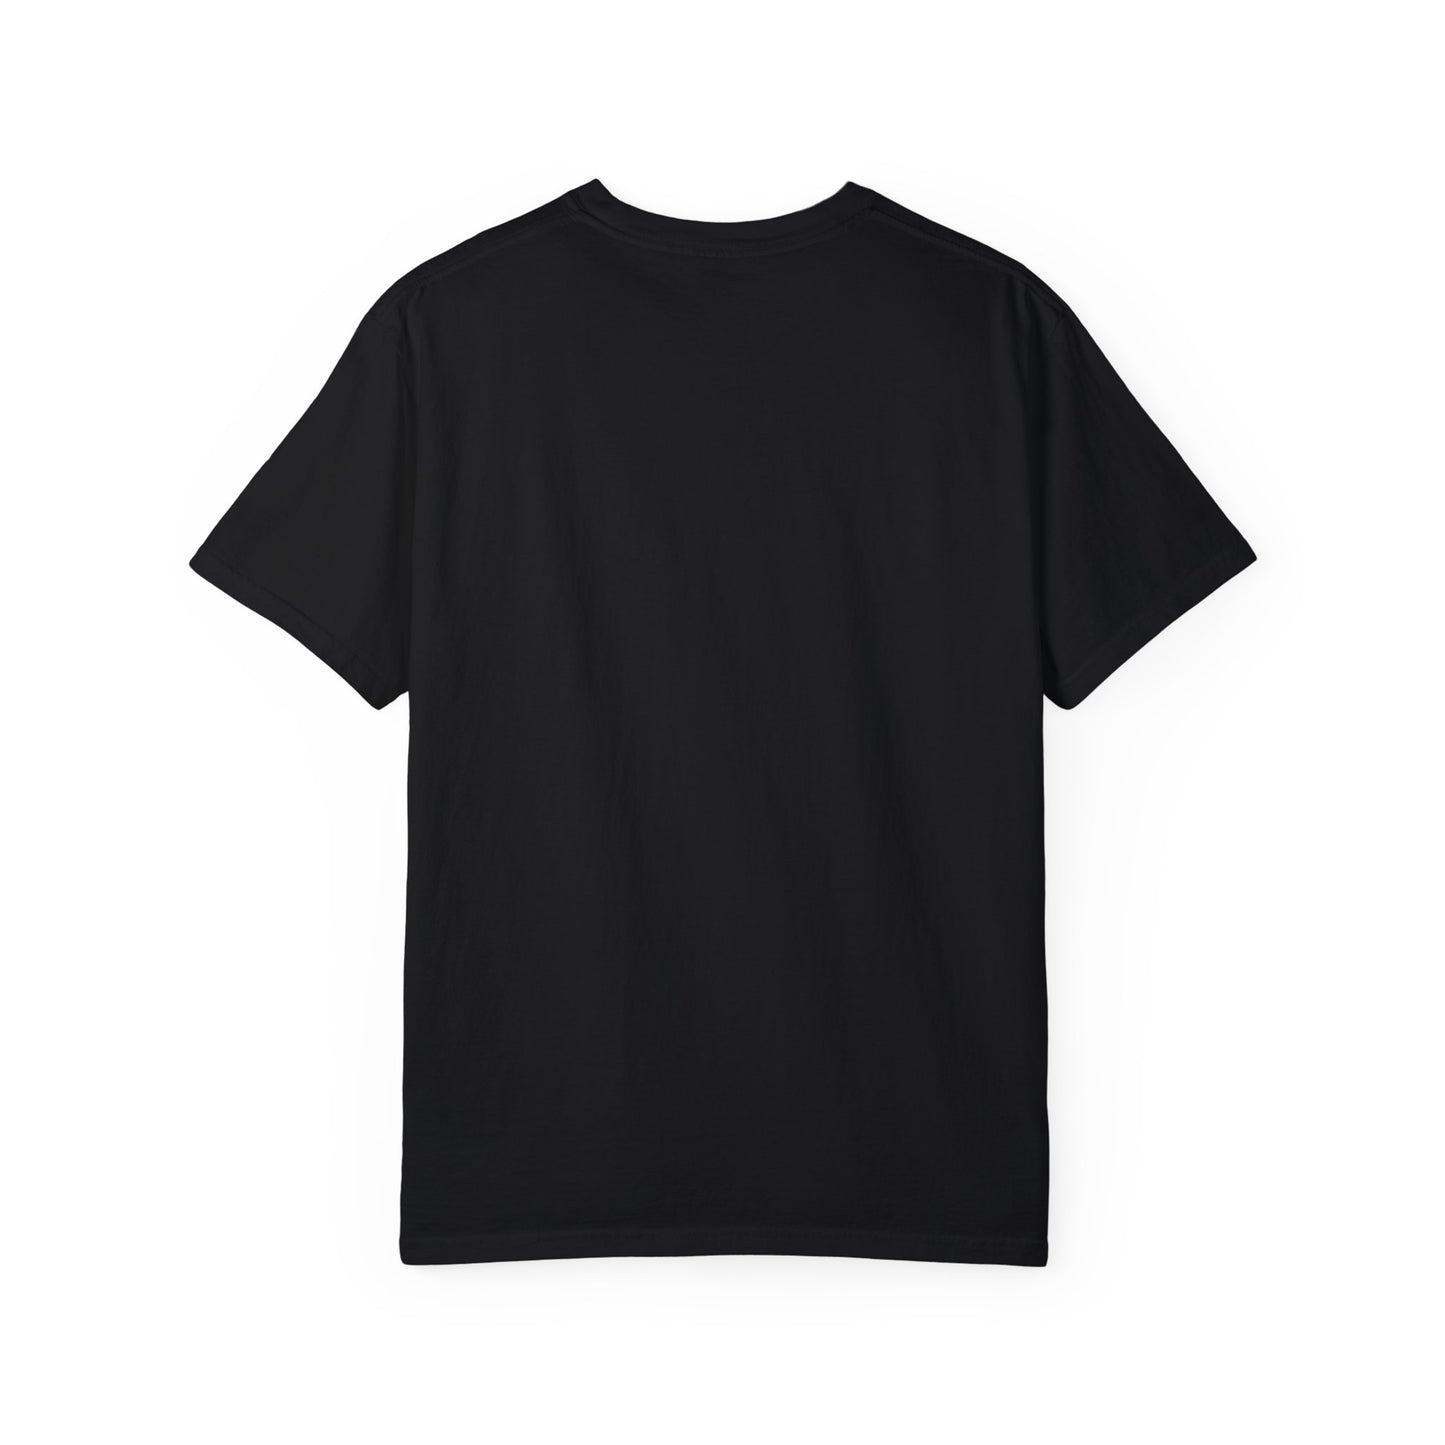 Dope Adventure Tee (Unisex Garment-Dyed T-shirt)